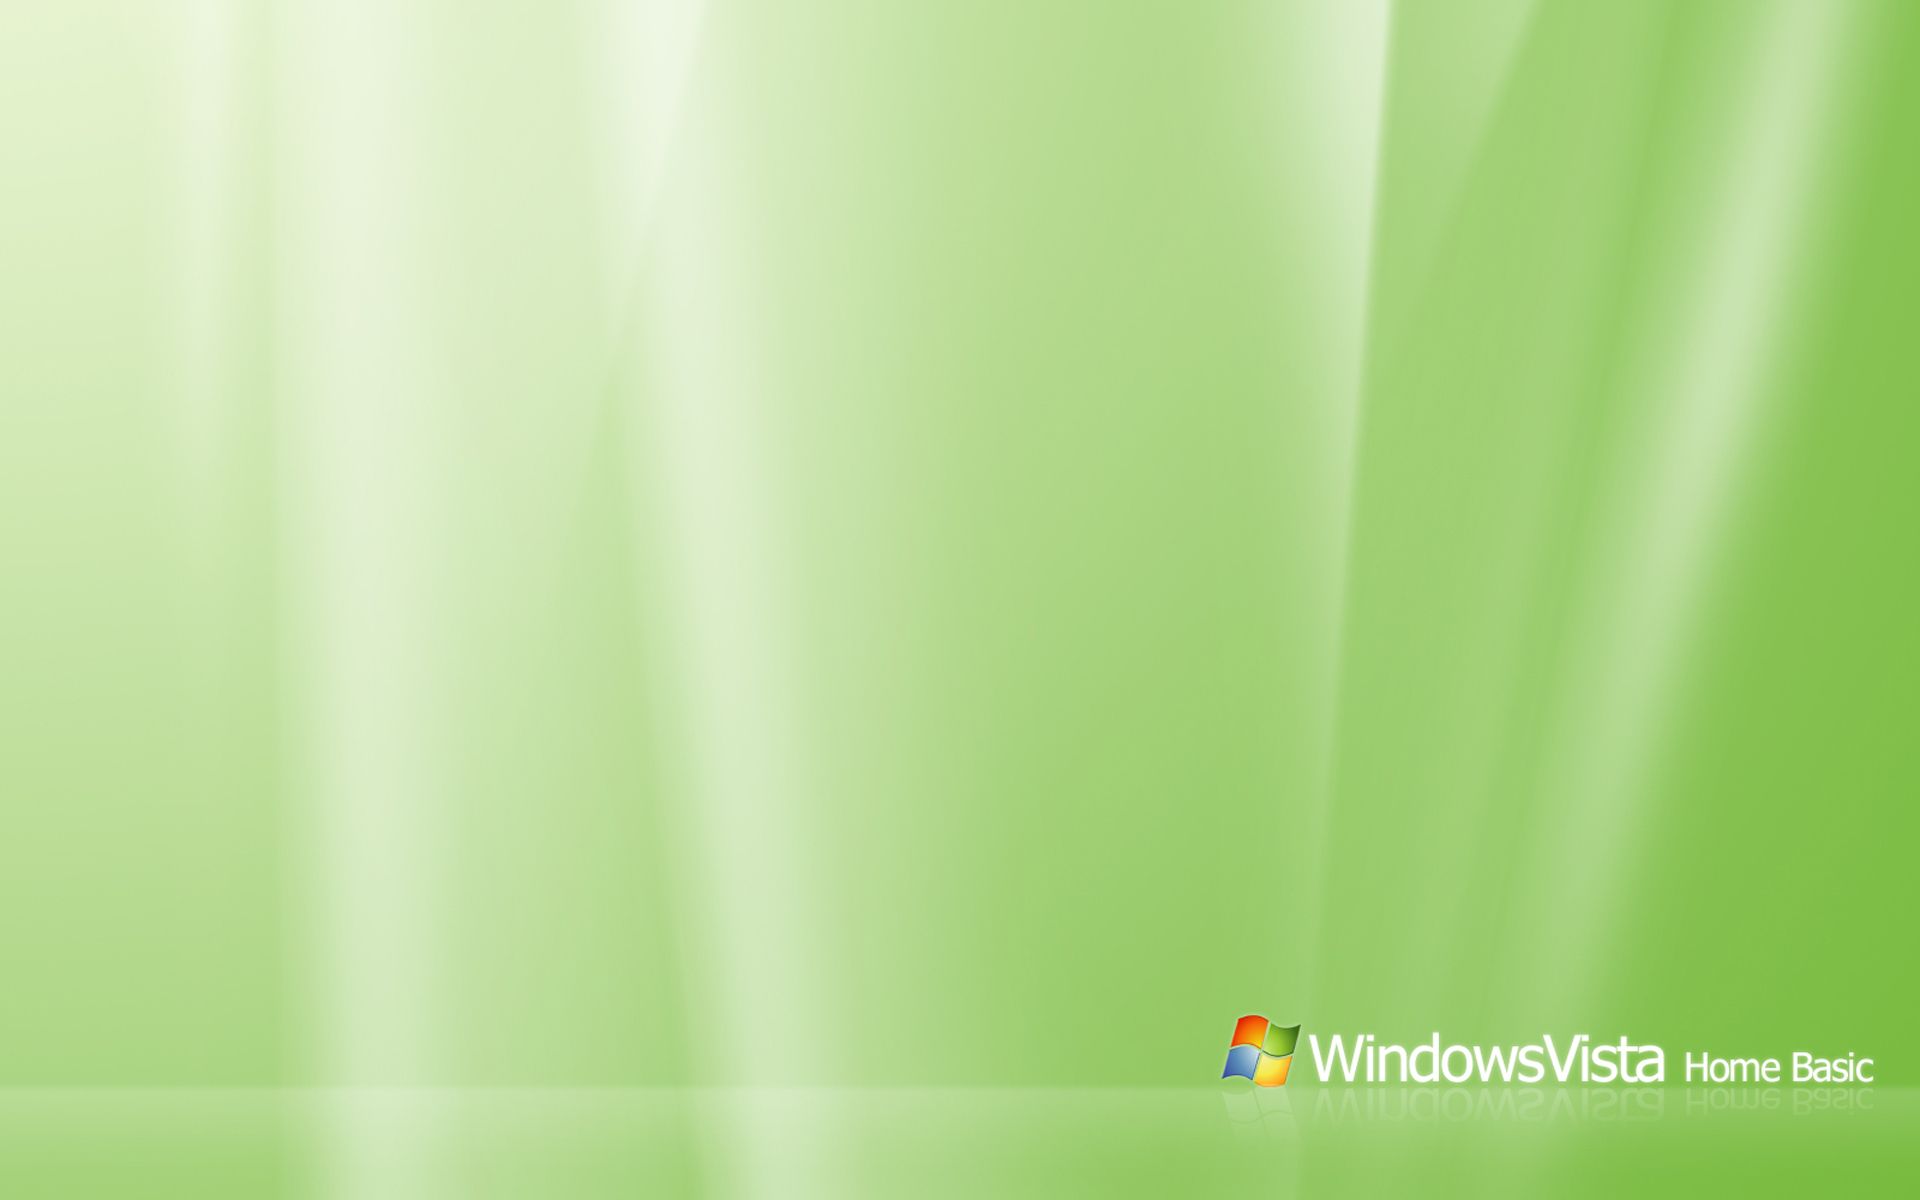 Windows Vista Home Basic Wallpaper In 19x10 Resolution